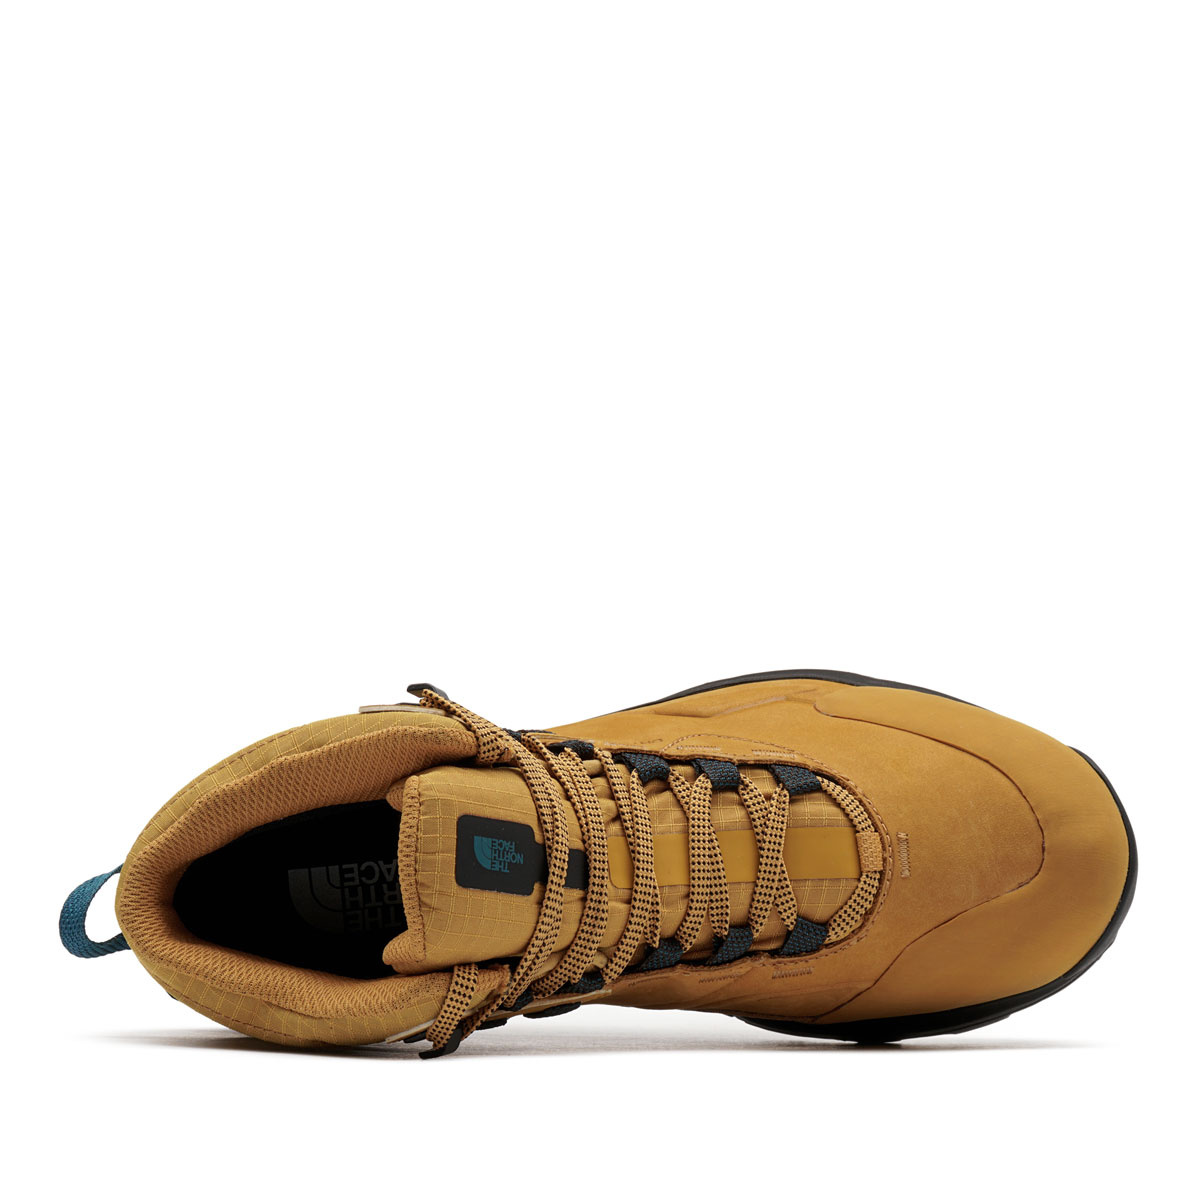 The North Face Cragstone Leather Mid Waterproof Мъжки спортни обувки NF0A7W6TYQR